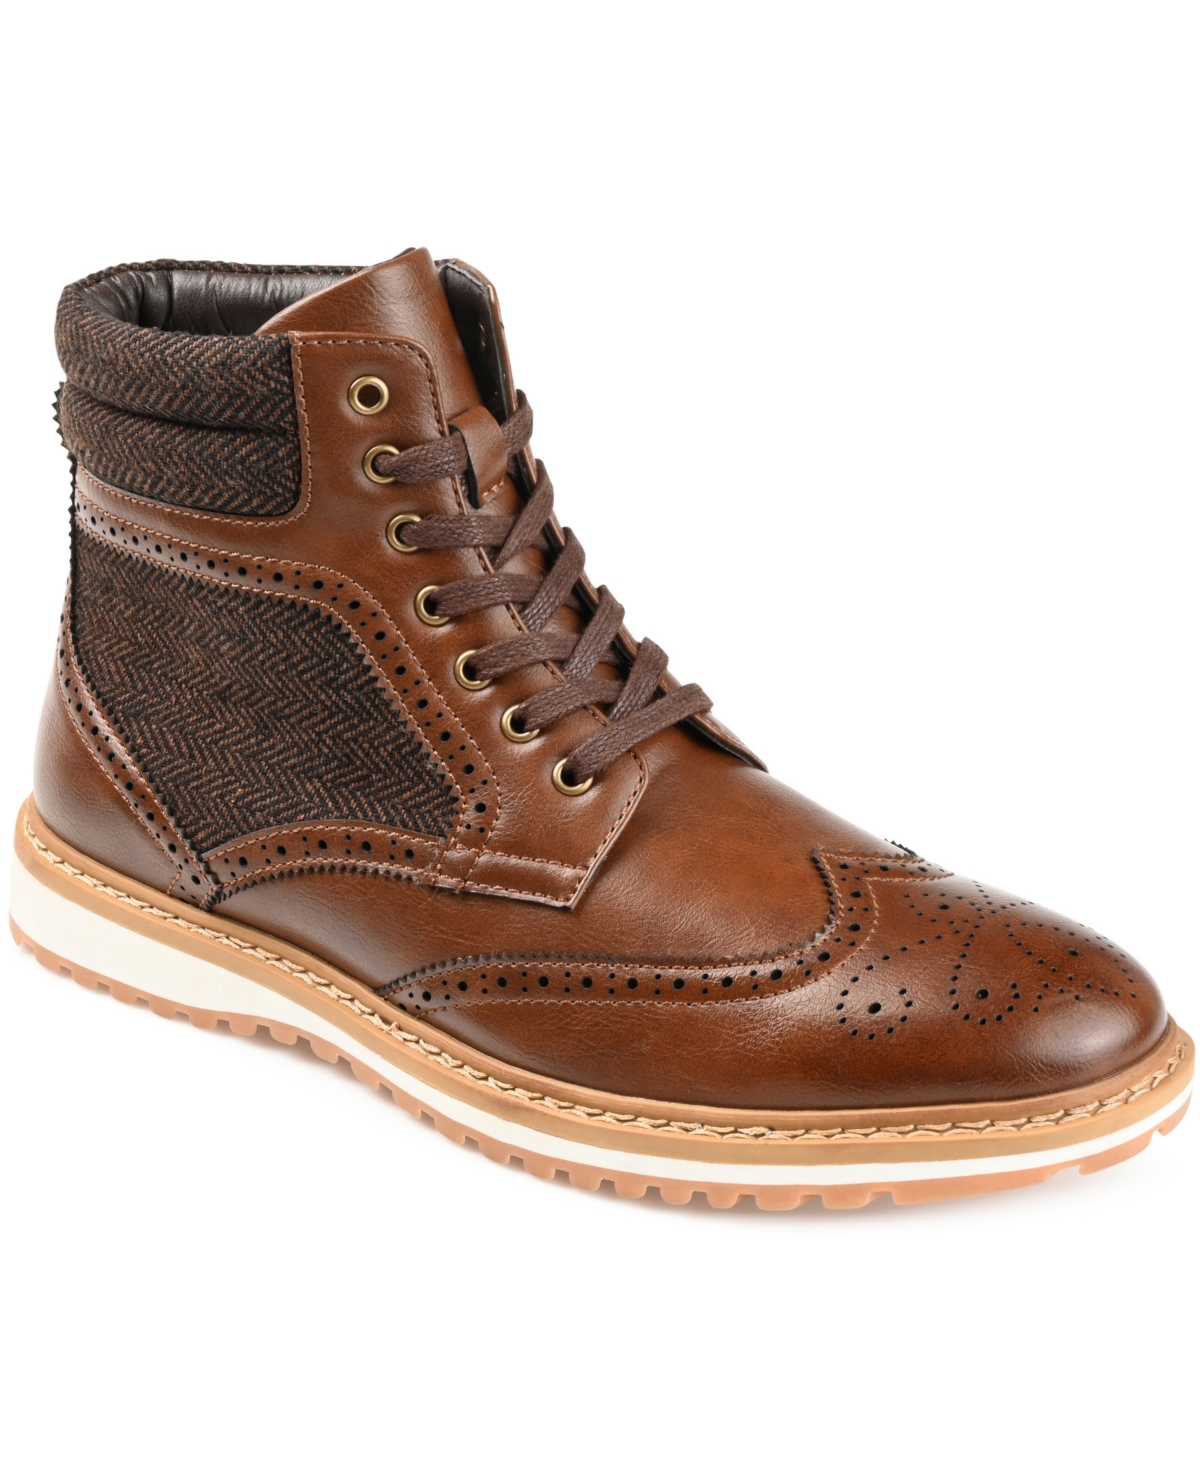 Men's Harlan Wingtip Ankle Boots - Brown